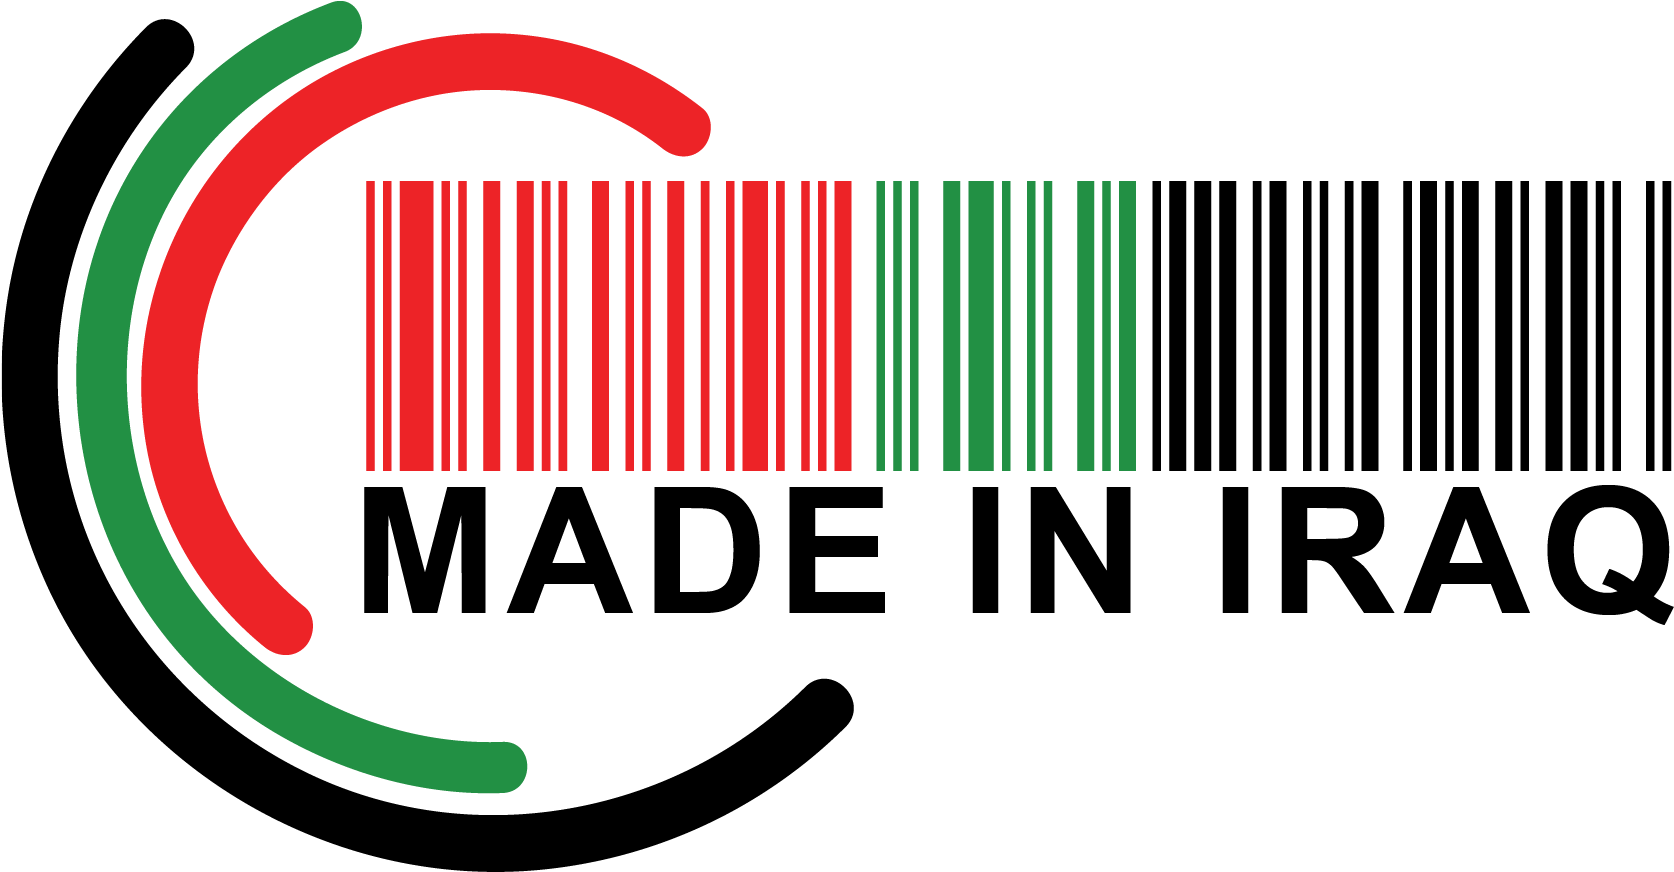 Madein Iraq Barcode Design PNG image